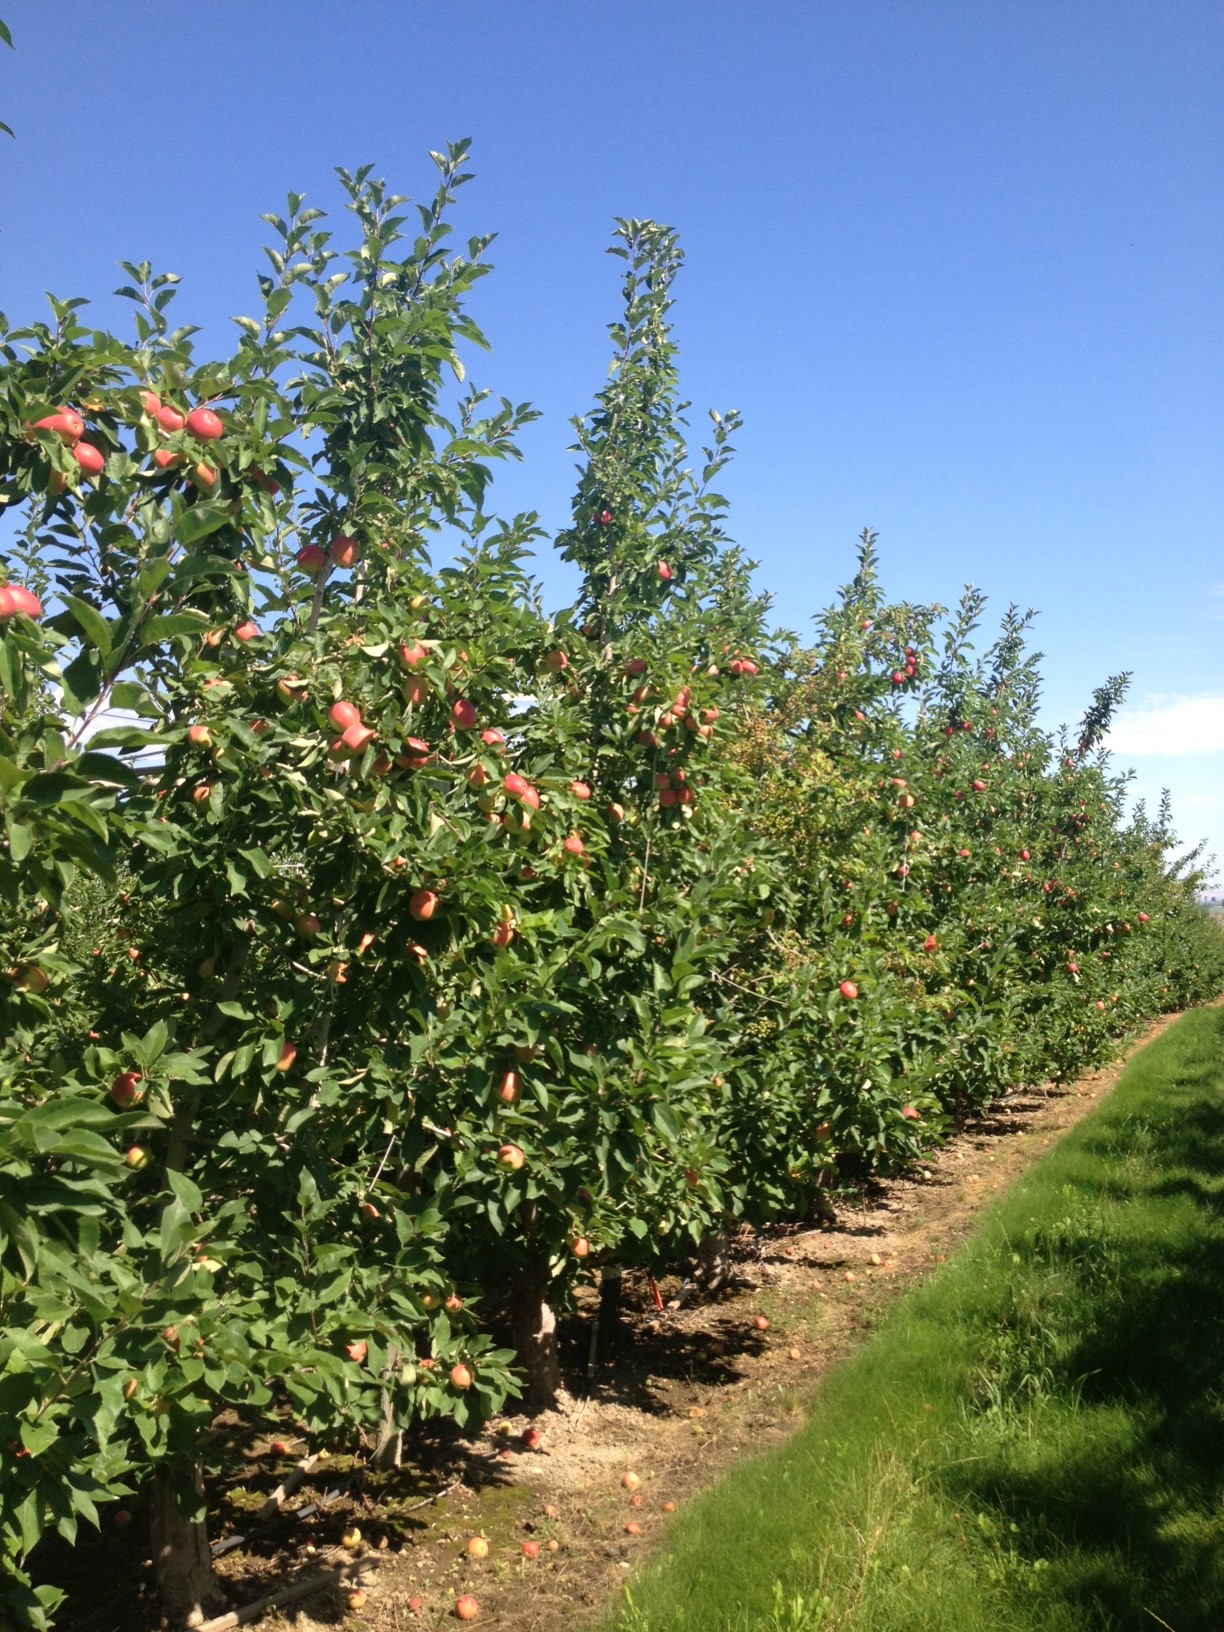 Big crop of SweeTango apples set for late August start